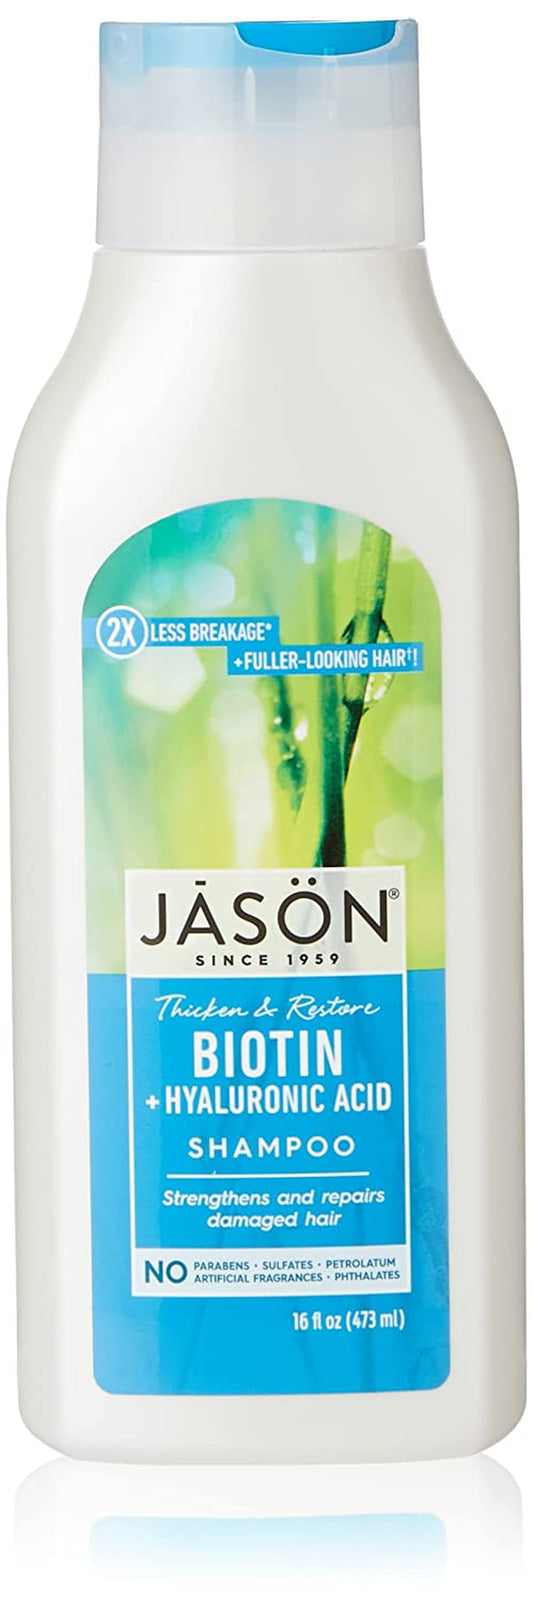 Jason Restorative Biotin Shampoo, 16 Oz. (Packaging May Vary)